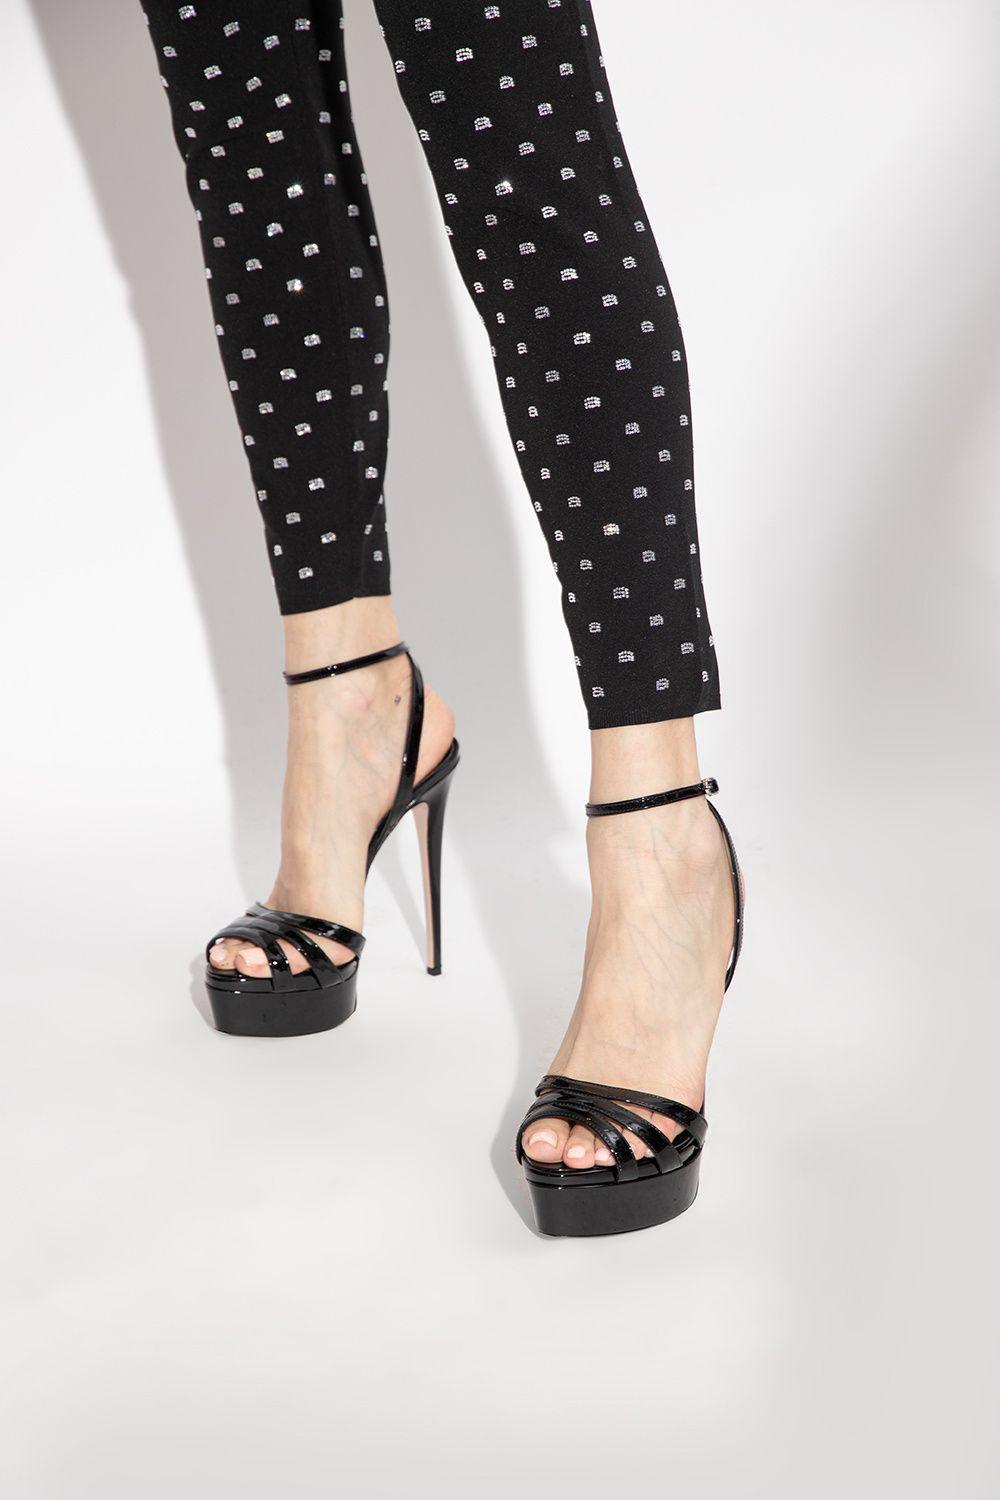 Le Silla 'lola' Platform Sandals in Black | Lyst